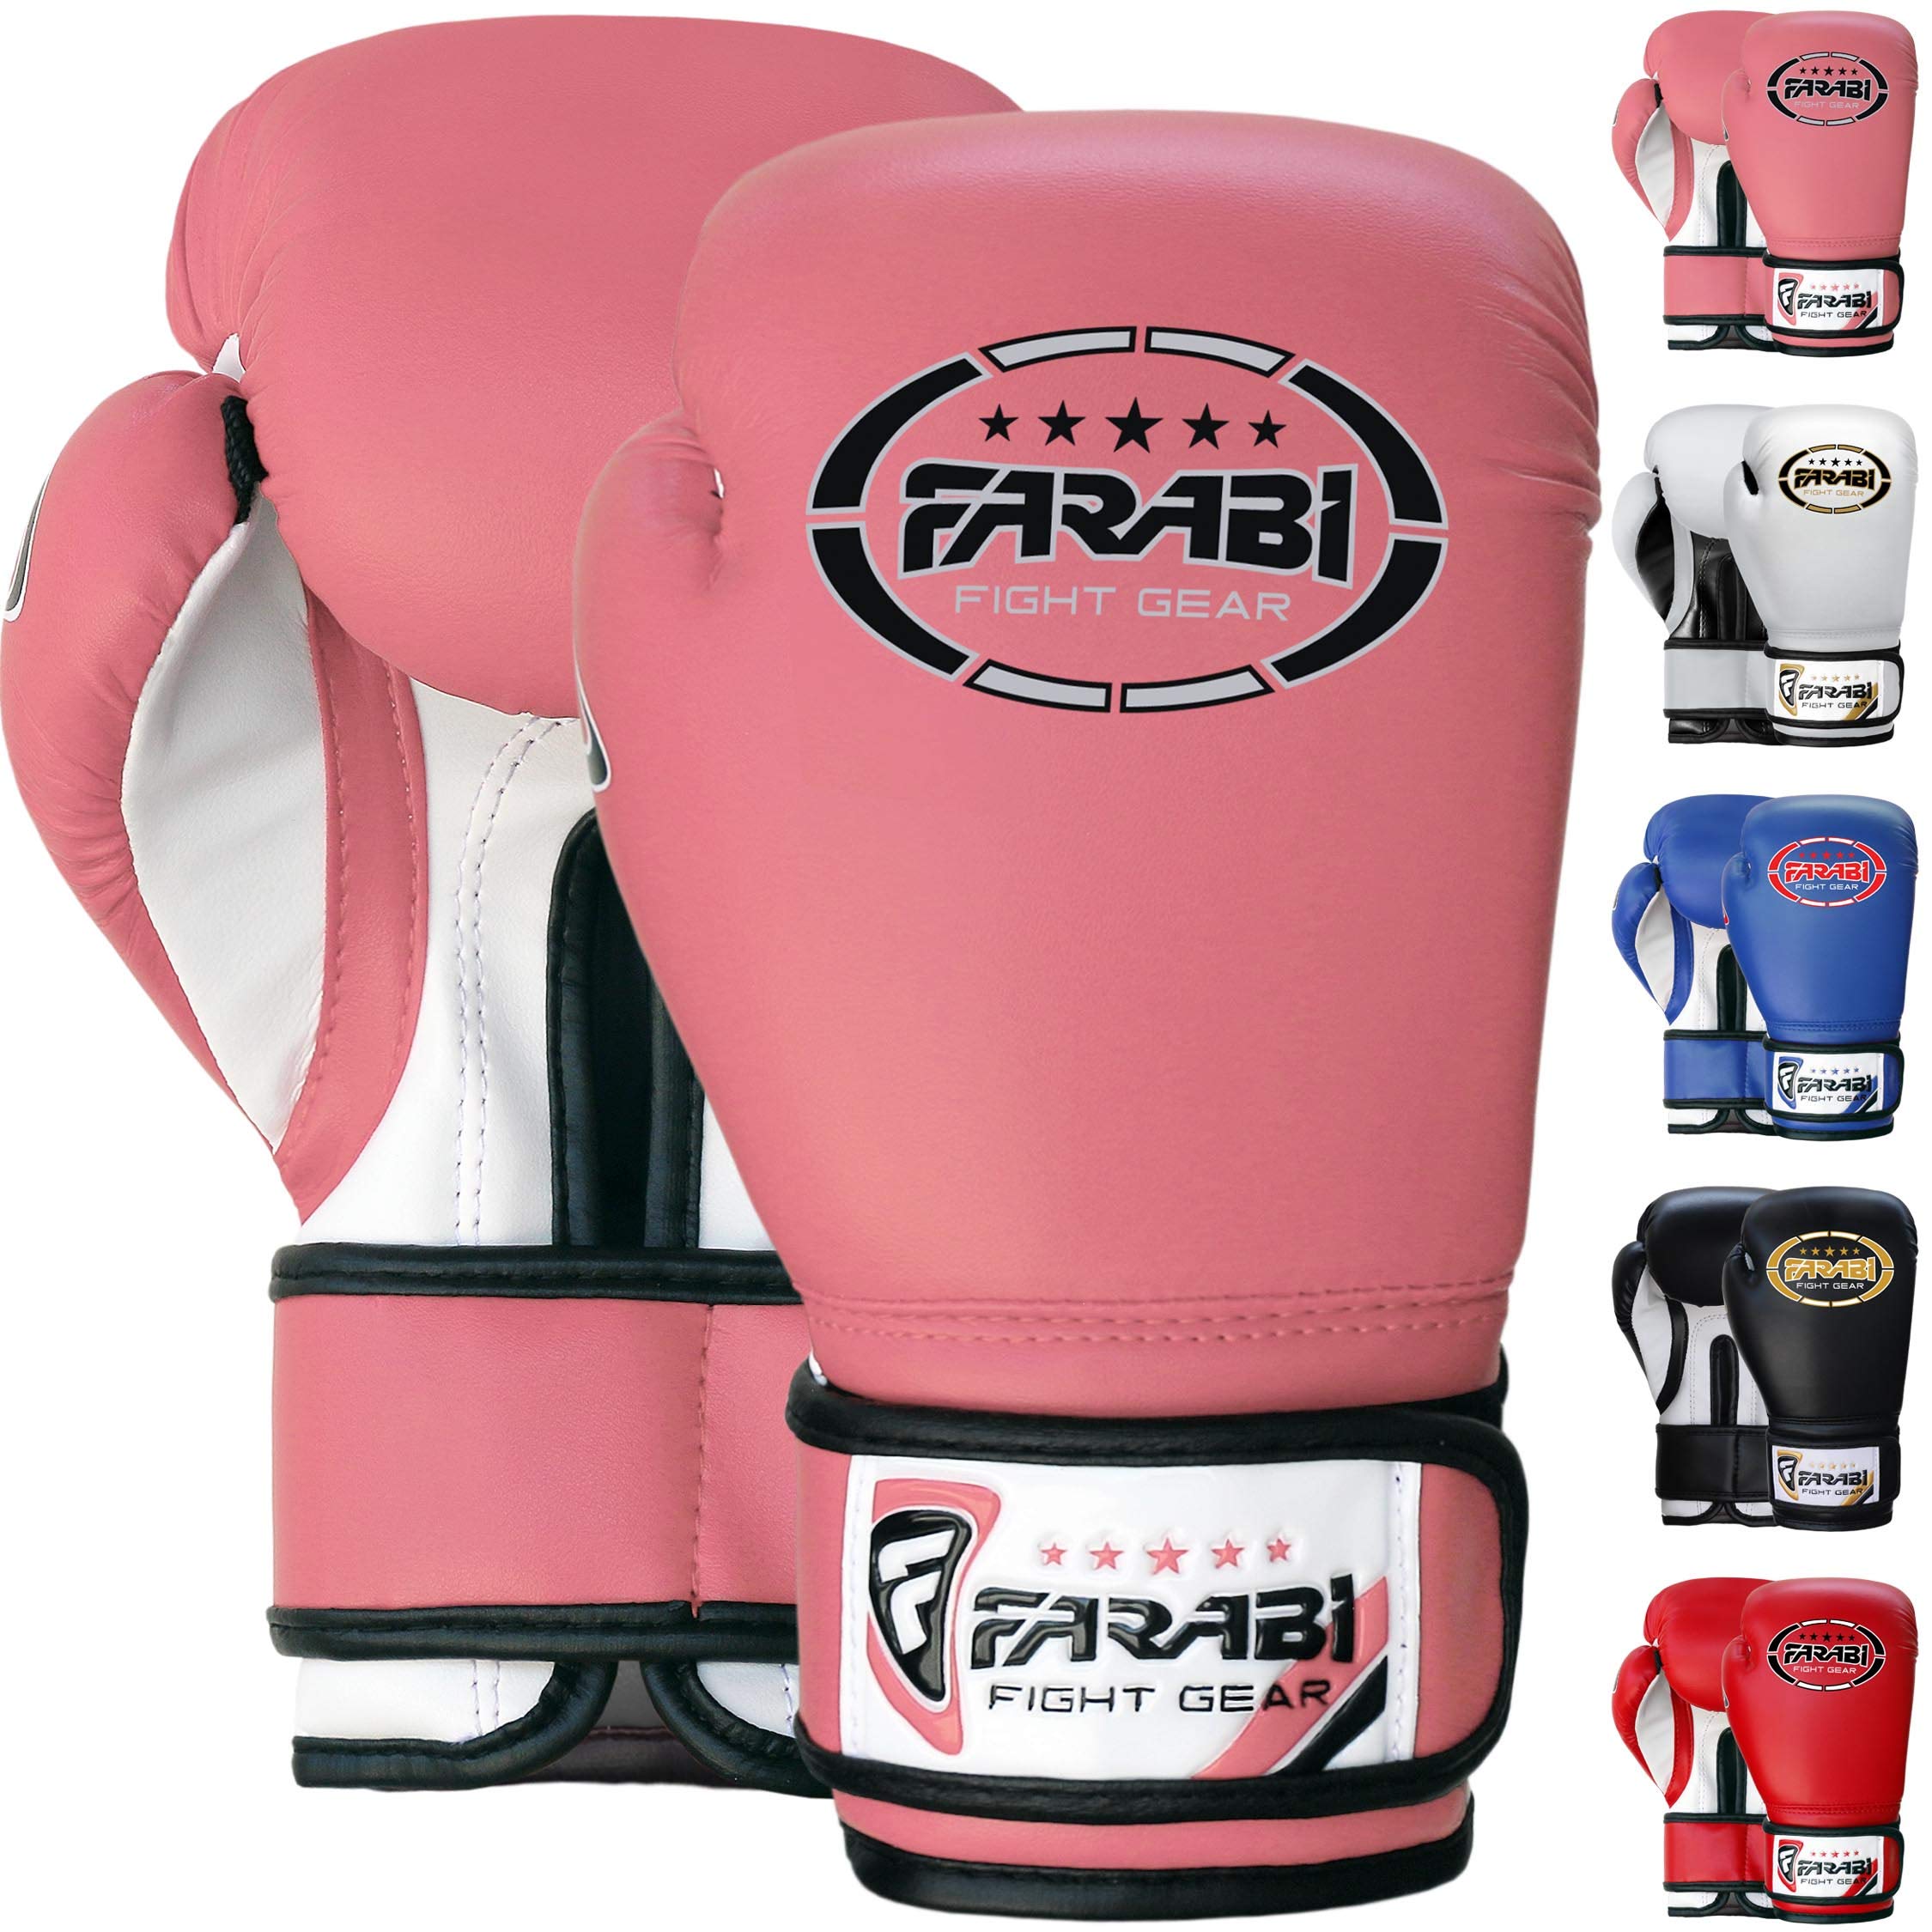 Farabi Sports 4 oz 6 oz 8 oz Boxhandschuhe Kinder Box Handschuhe MMA Muay Thai Kickboxen Sparring Boxsack Training Kinder Boxhandschuhe (Pink, 8-oz)